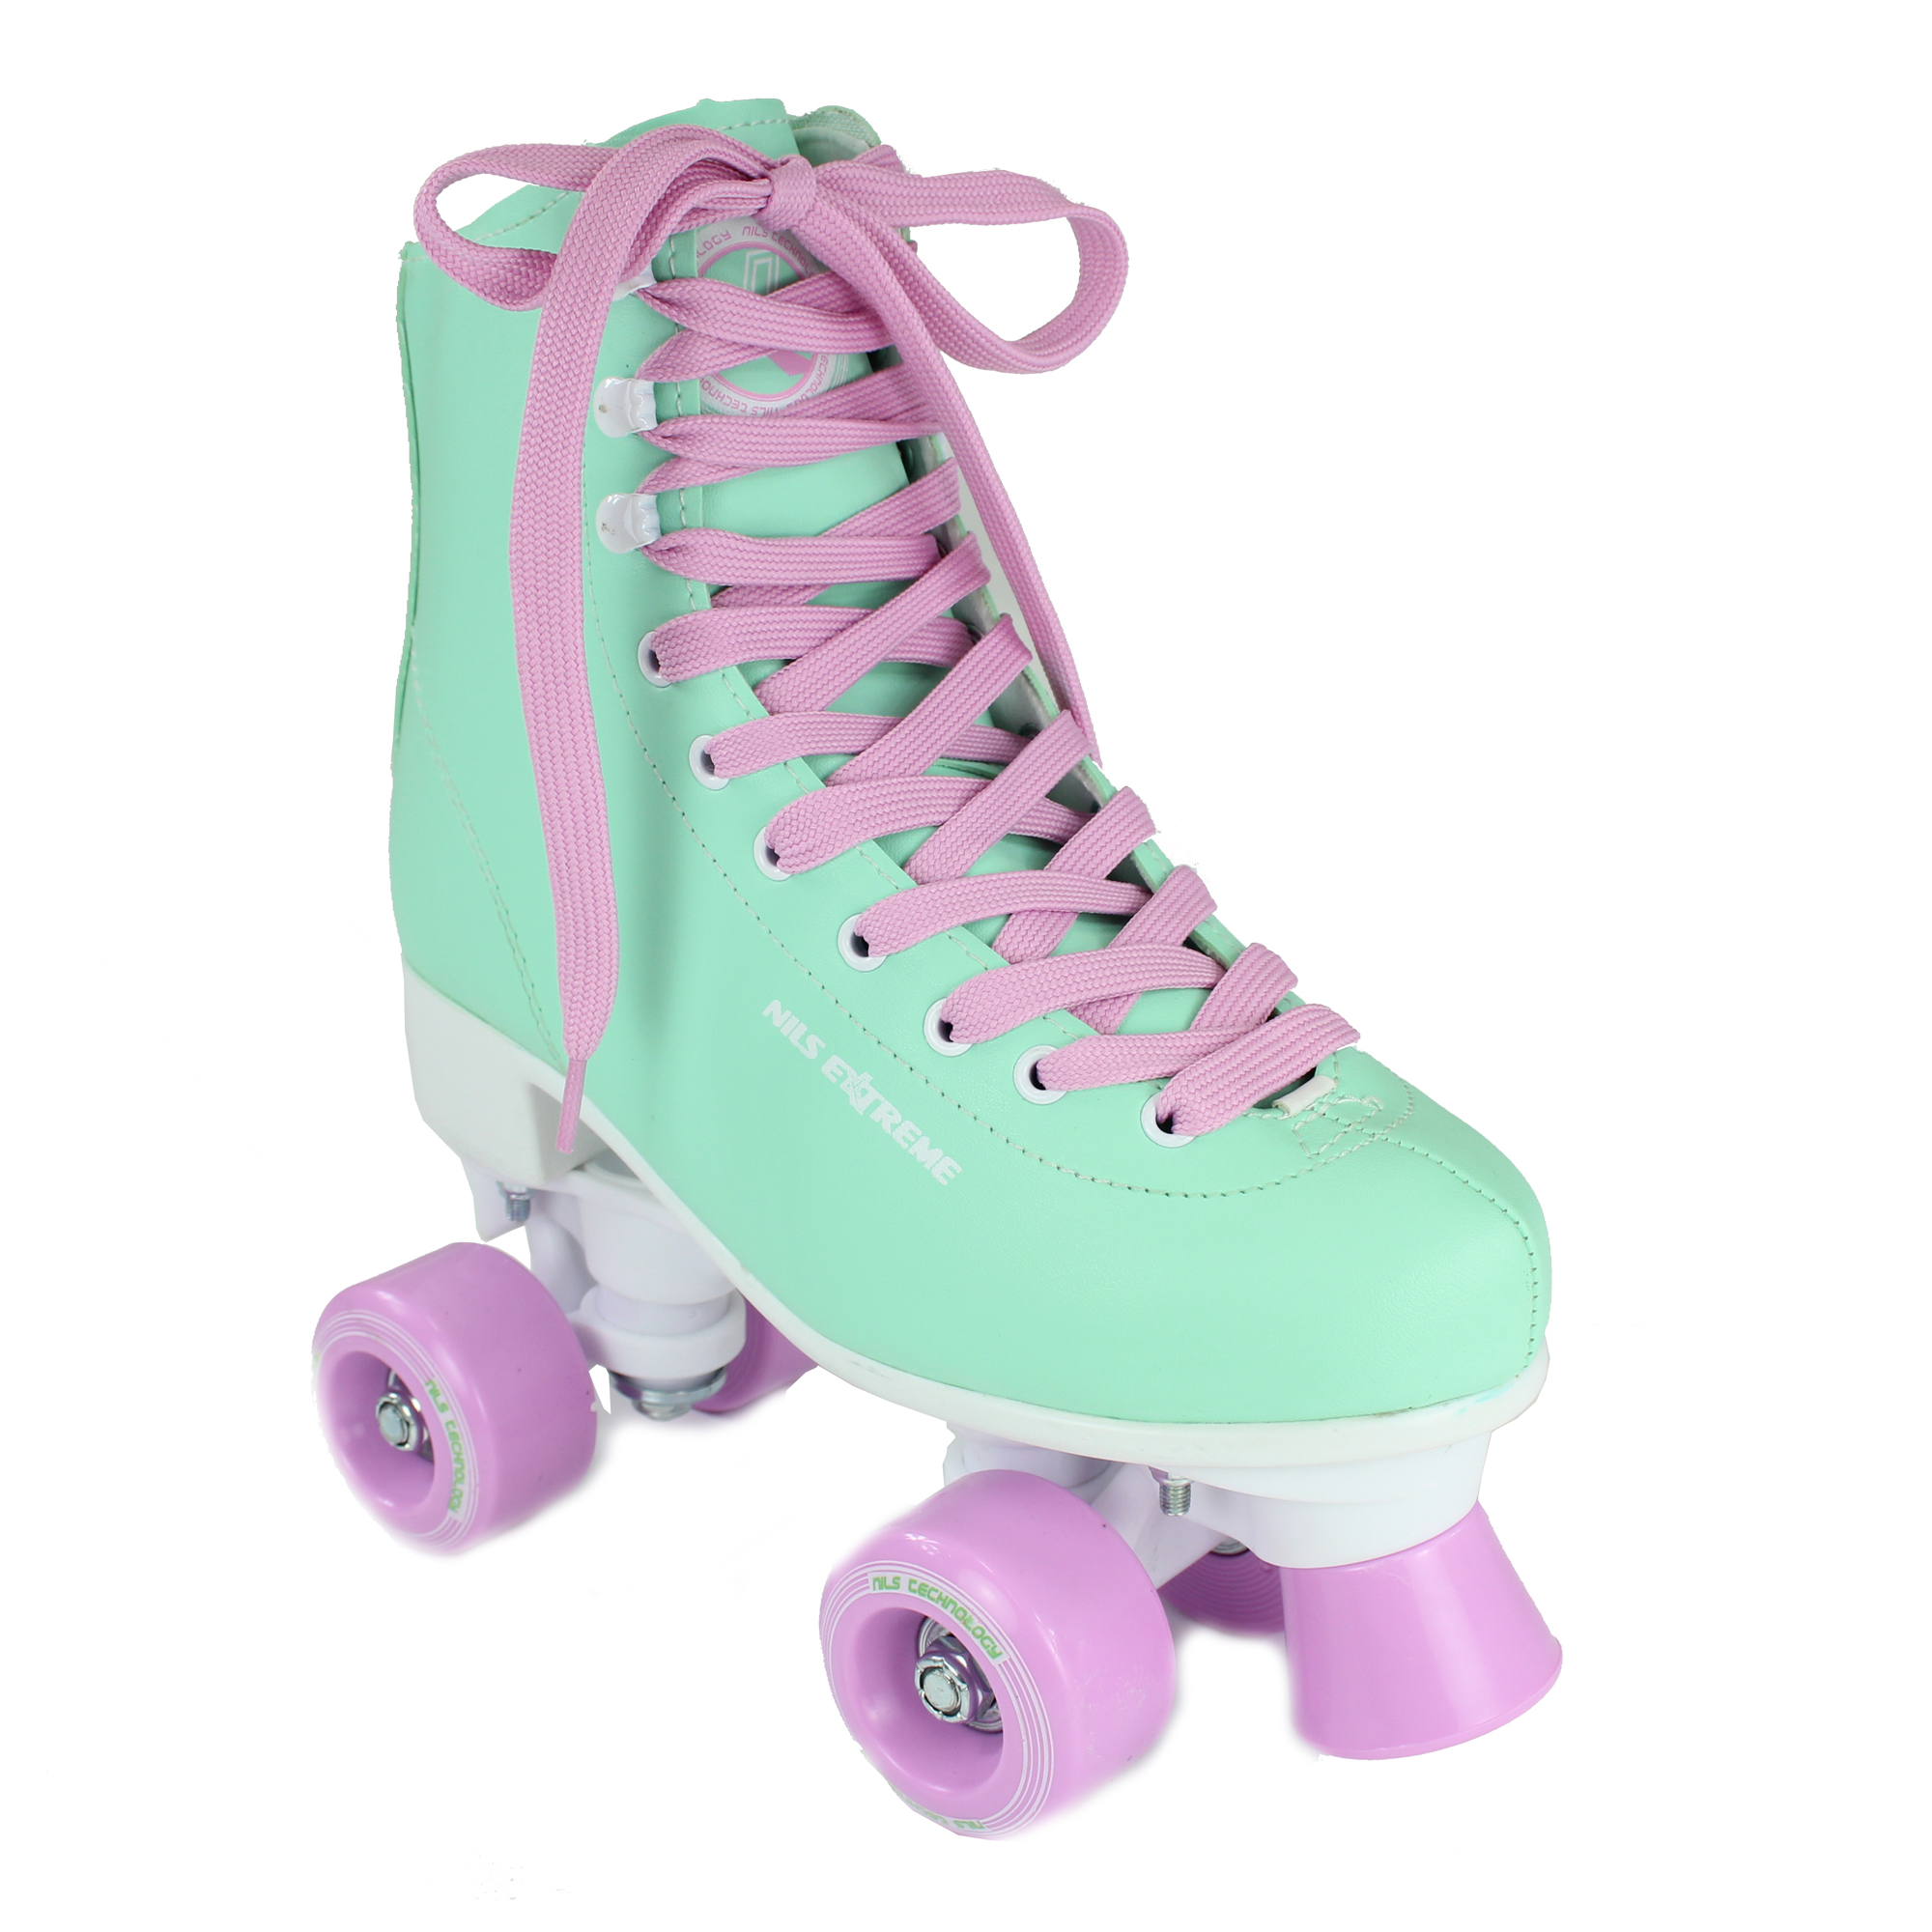 Kinder Rollschuhe Roller Skates GRÖßENVERSTELLBAR Inlineskates Skate NQ4411 NILS 